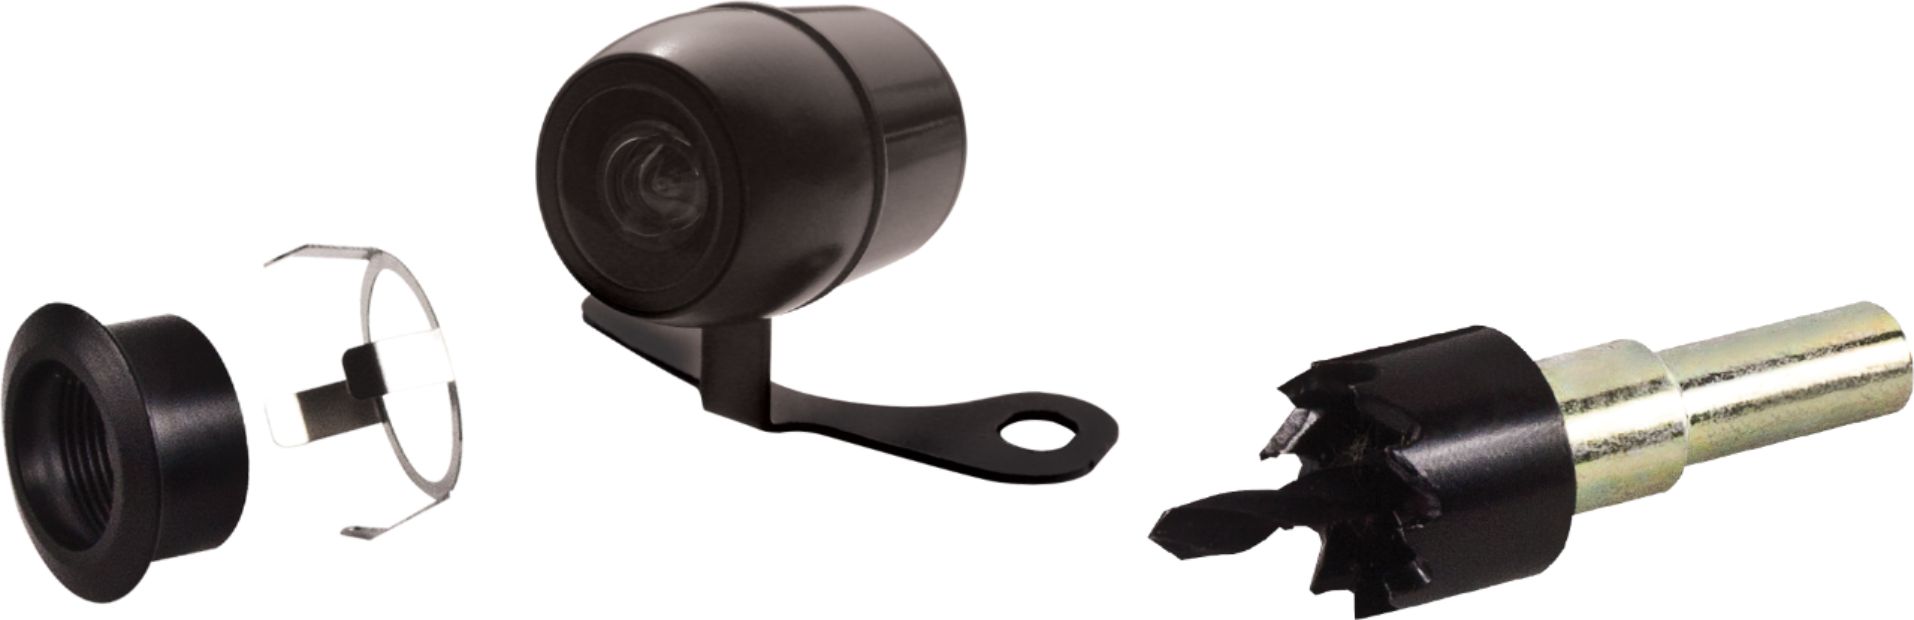 Metra - Install Bay Bullet Camera for Most Vehicles - Black